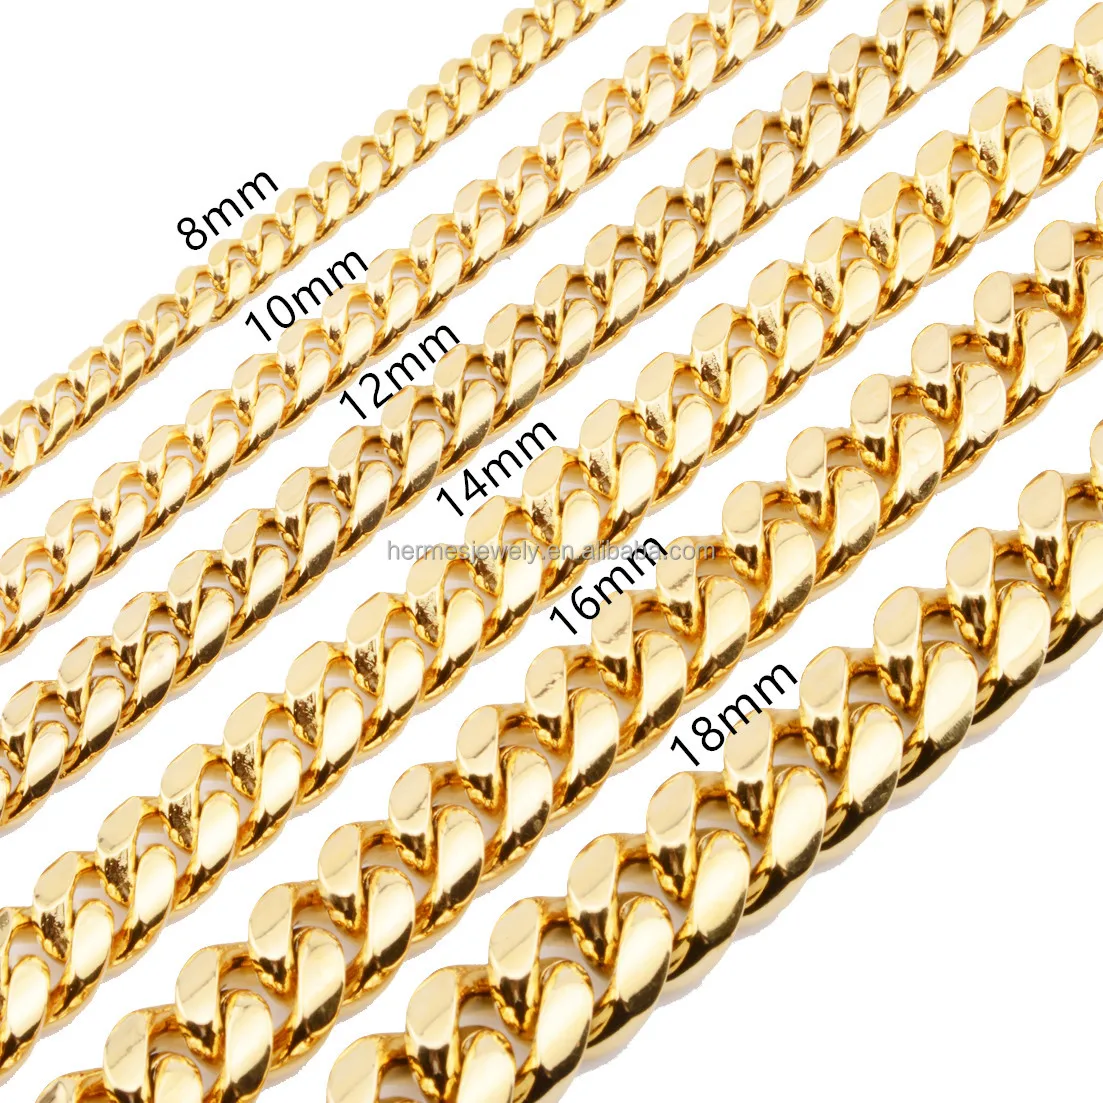 

HIP HOP 18K Gold Plated Cadena De Oro 14k Erkek Kolye Name Kolye 14k Gold Chain men Jewelry Stainless Steel Miami Necklace, Gold color